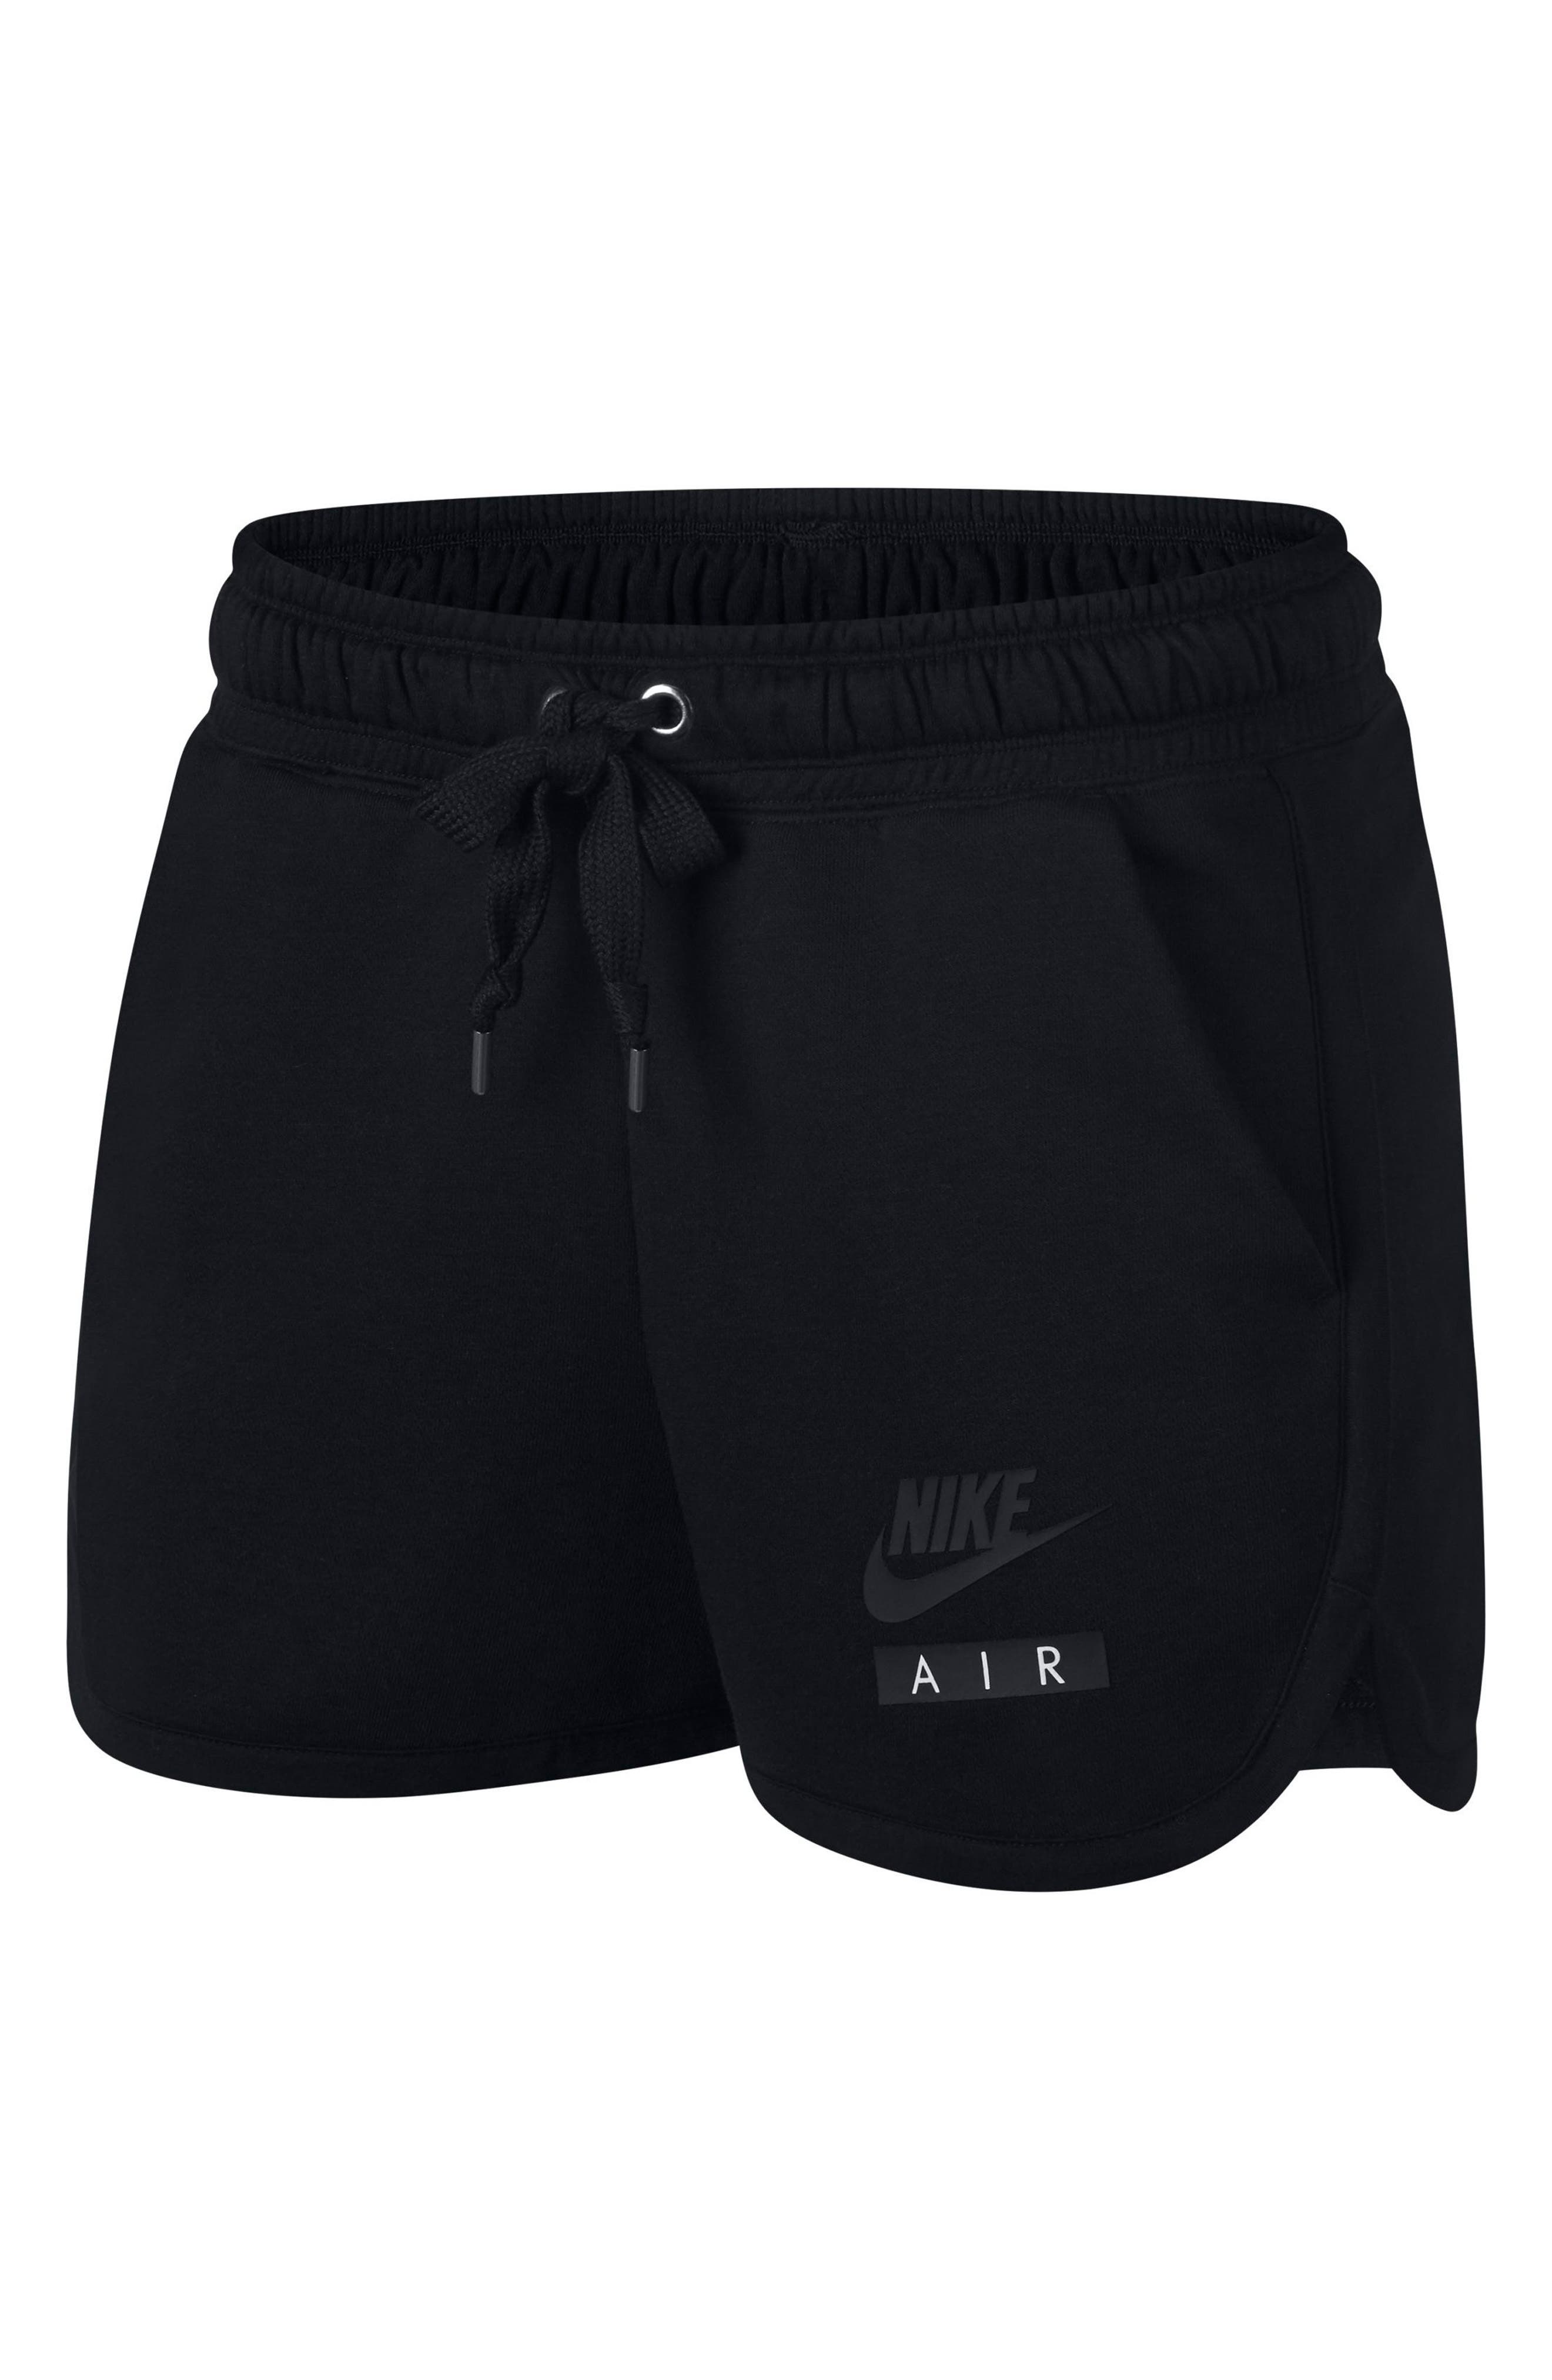 nike terry cloth shorts womens